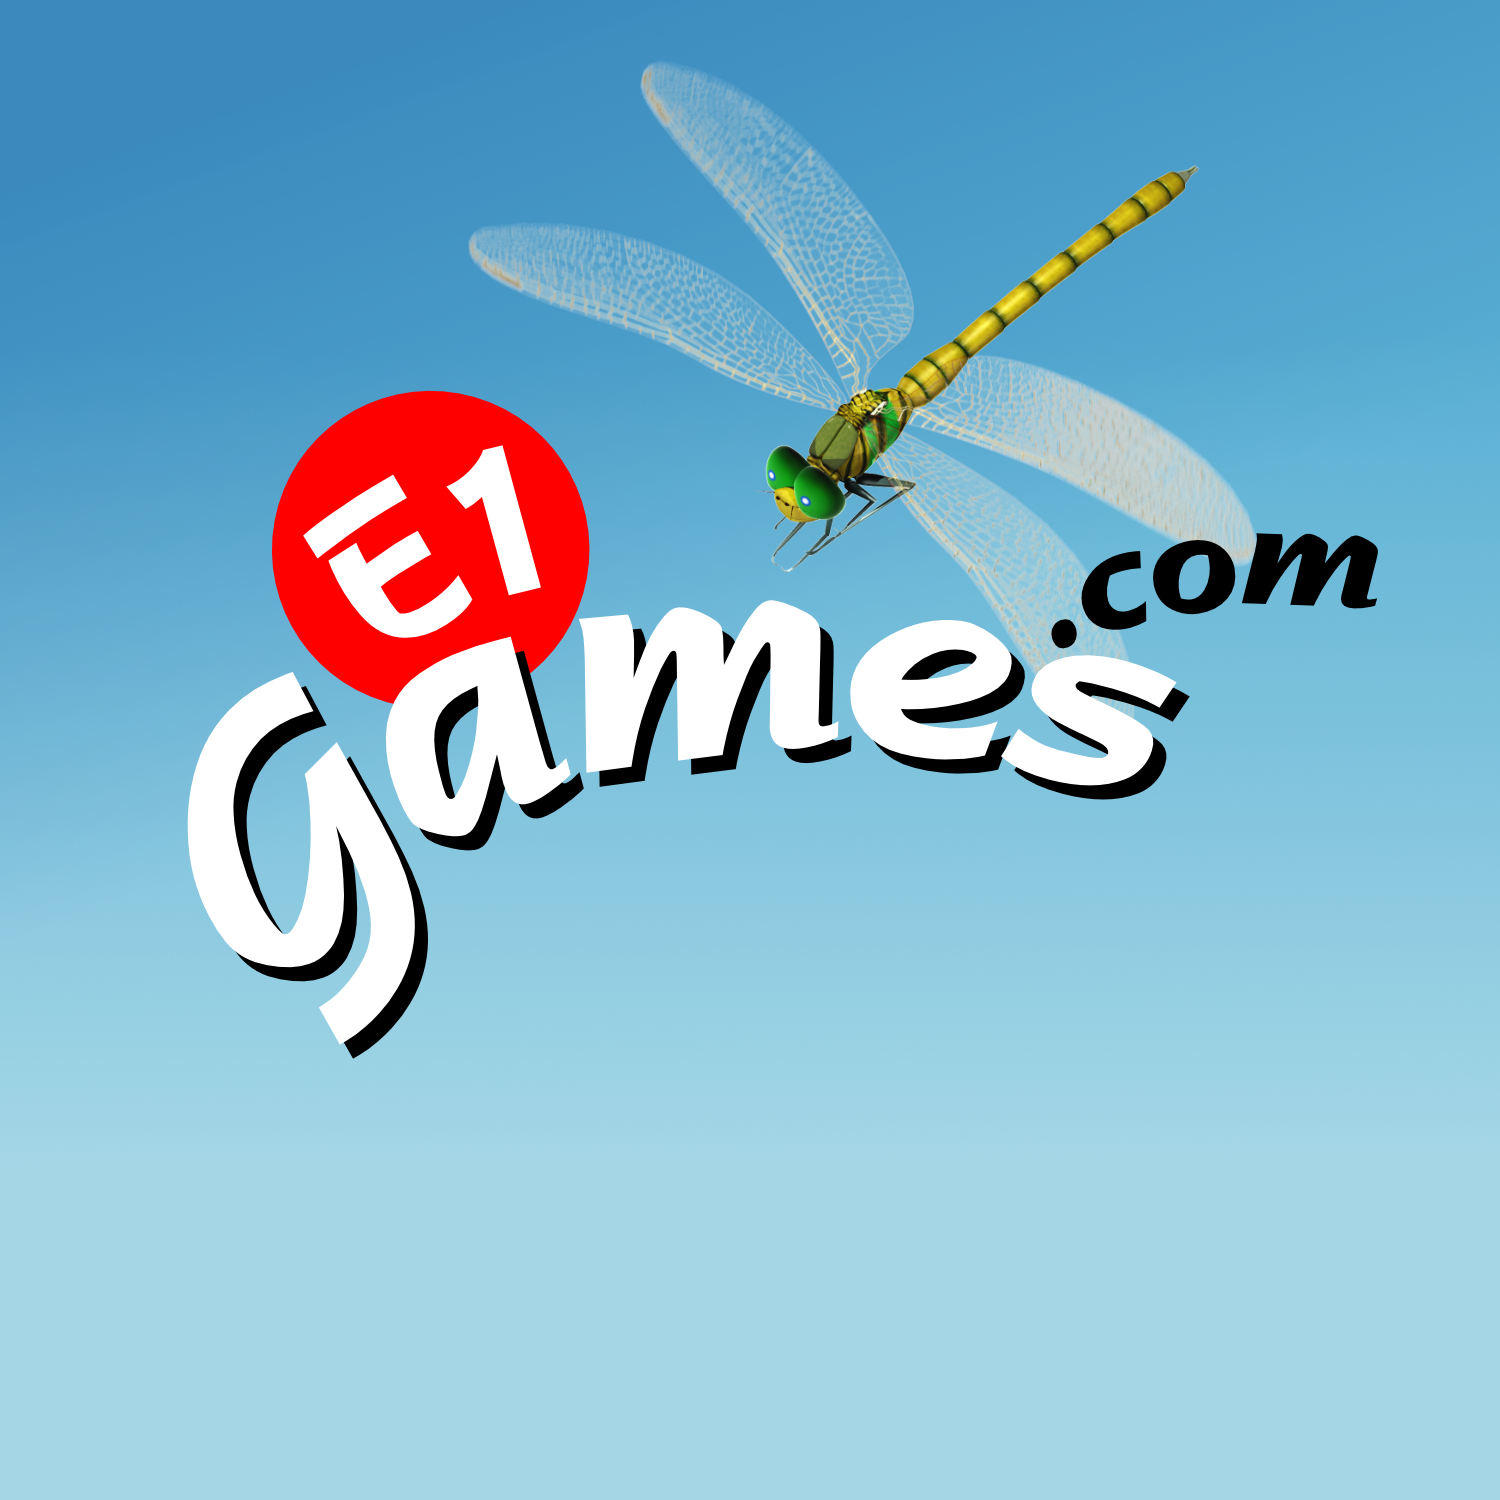 E1Games.com, Dragonfly Character, Logo, branding, Orangebox Digital, Lancs